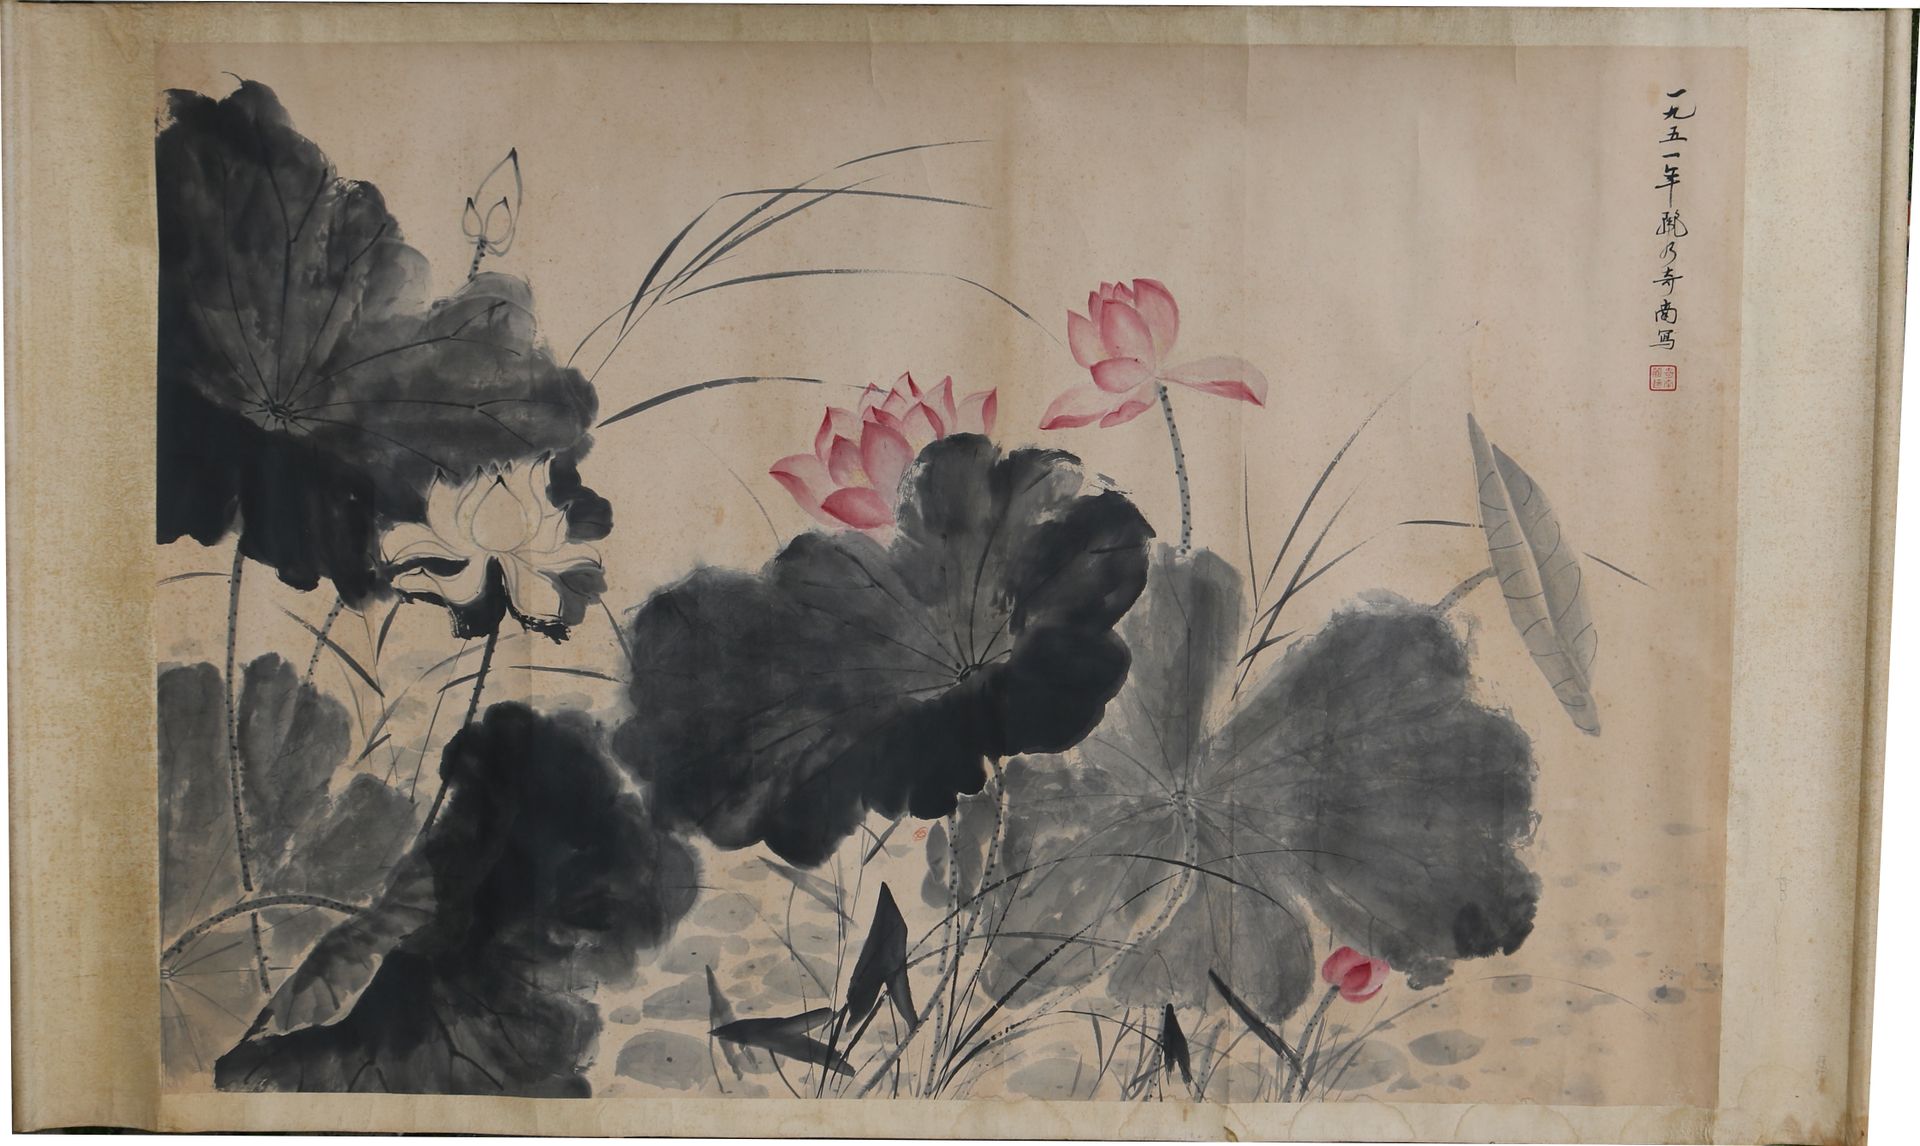 Qi Nan CHINA, 1951
Qi Nan
Tinta y colores sobre papel, lotos en su follaje

Tint&hellip;